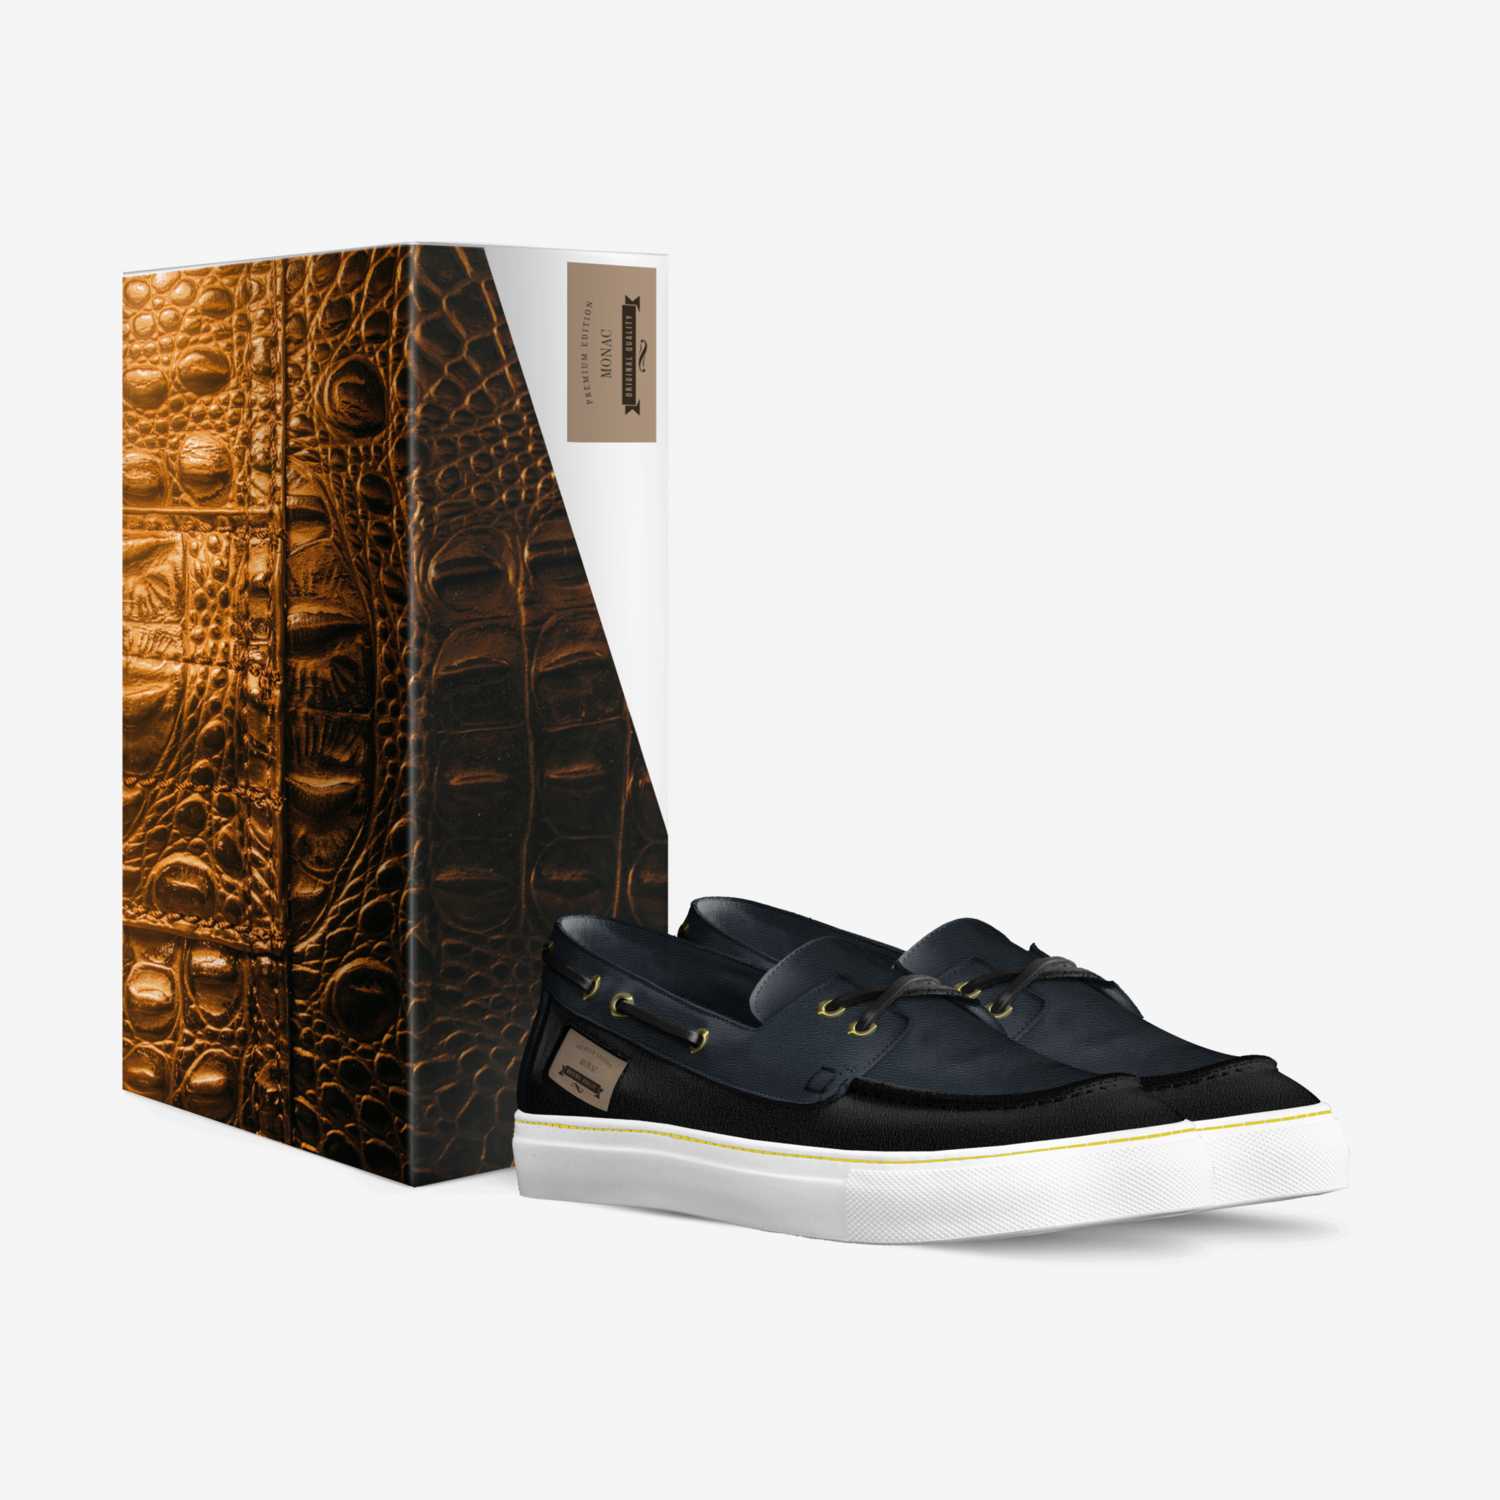 Monac custom made in Italy shoes by Cesar Kariv Becerra Perez | Box view